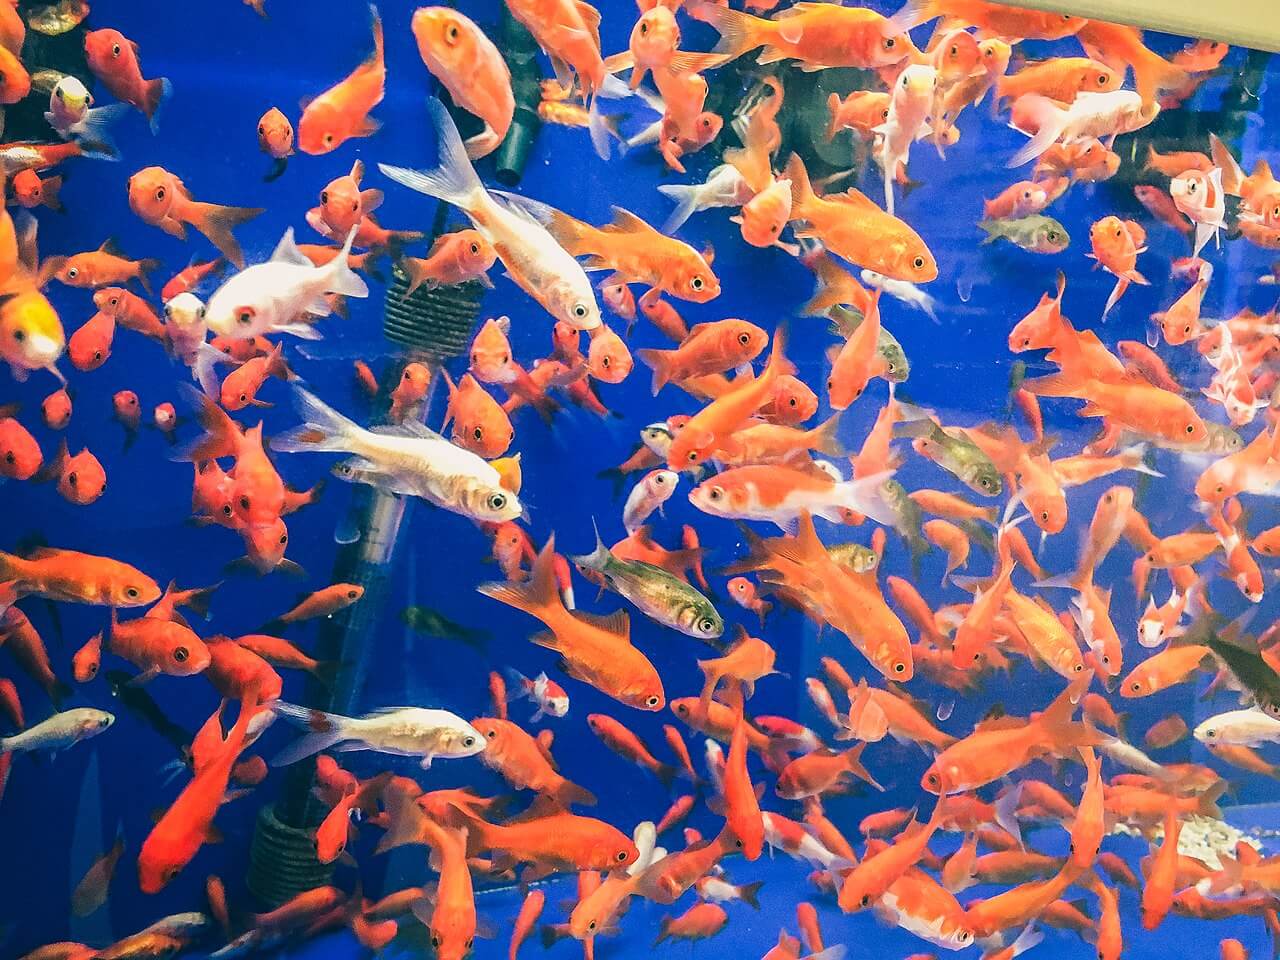 An Overcrowded Aquarium